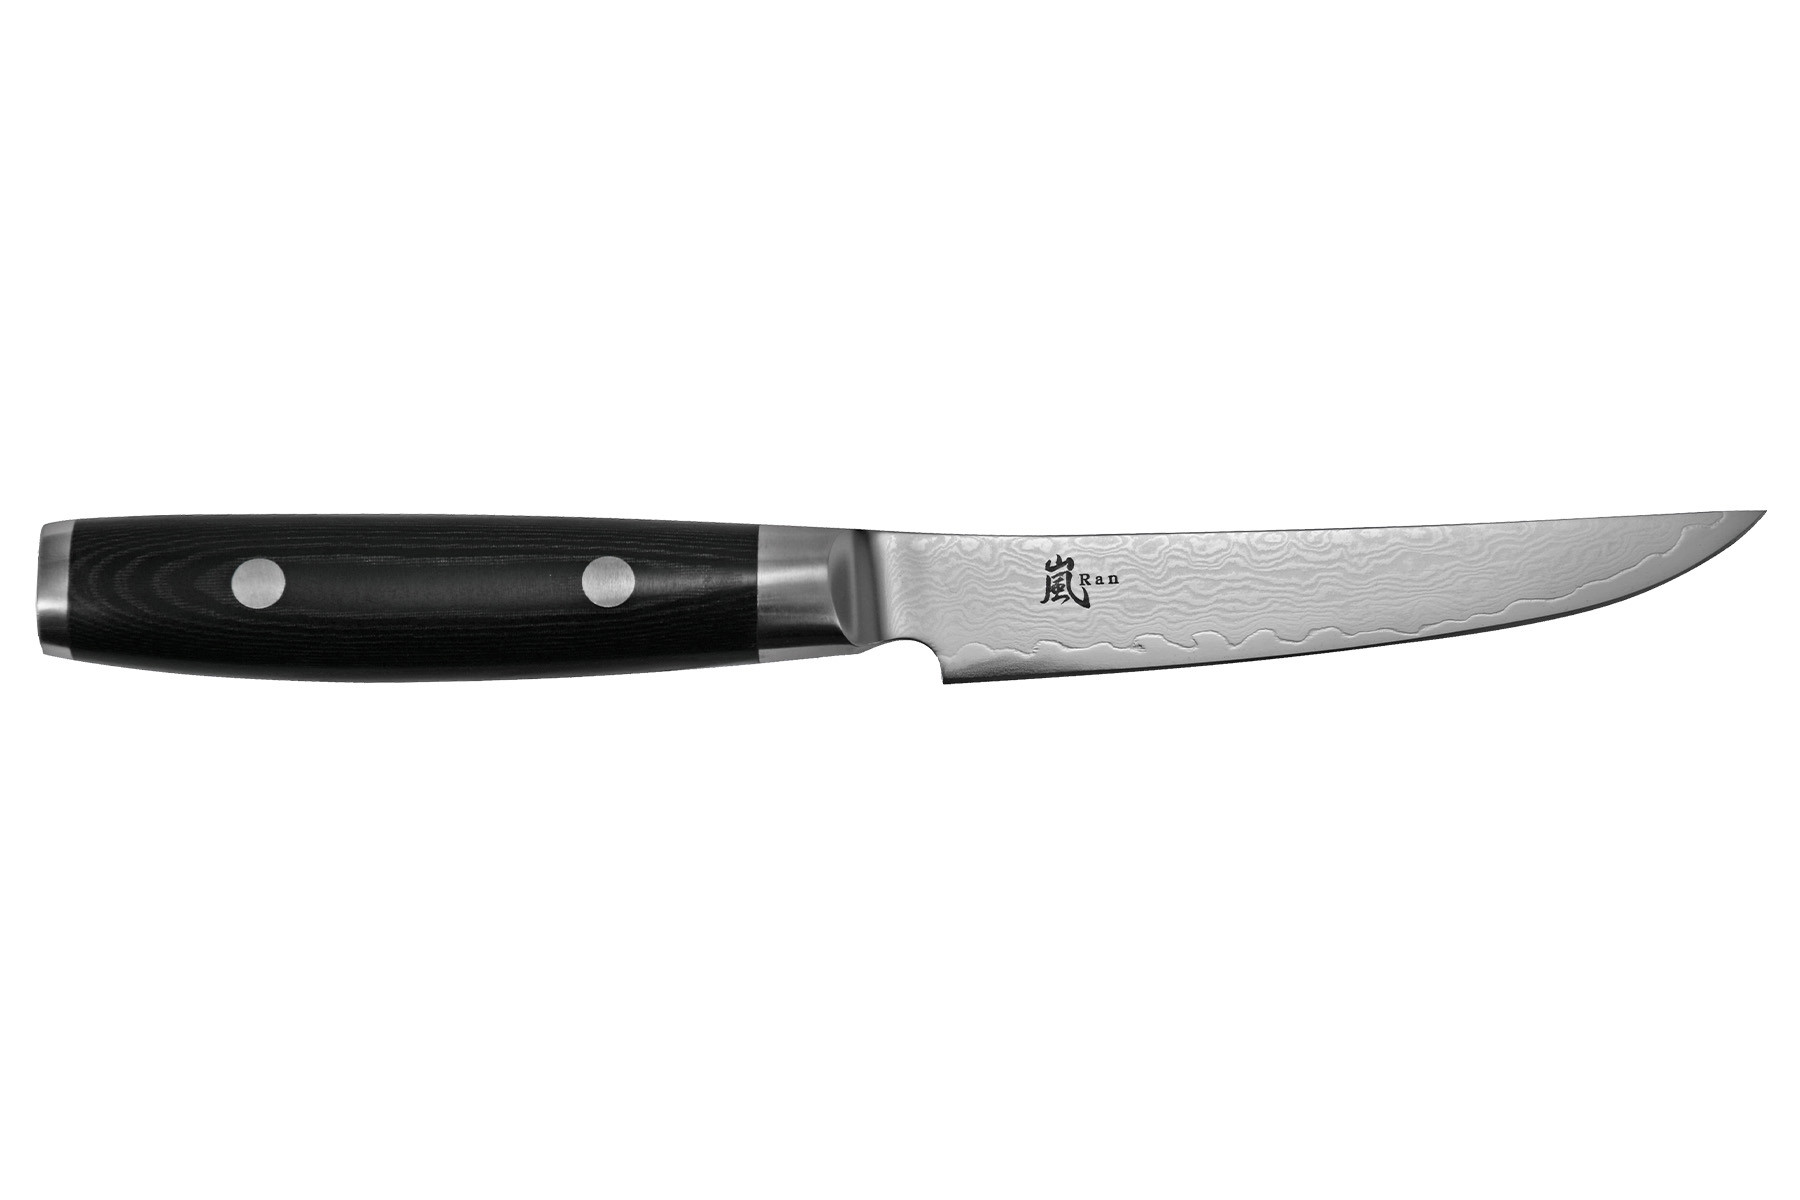 Couteau japonais Yaxell "Ran" - steak 11,3 cm